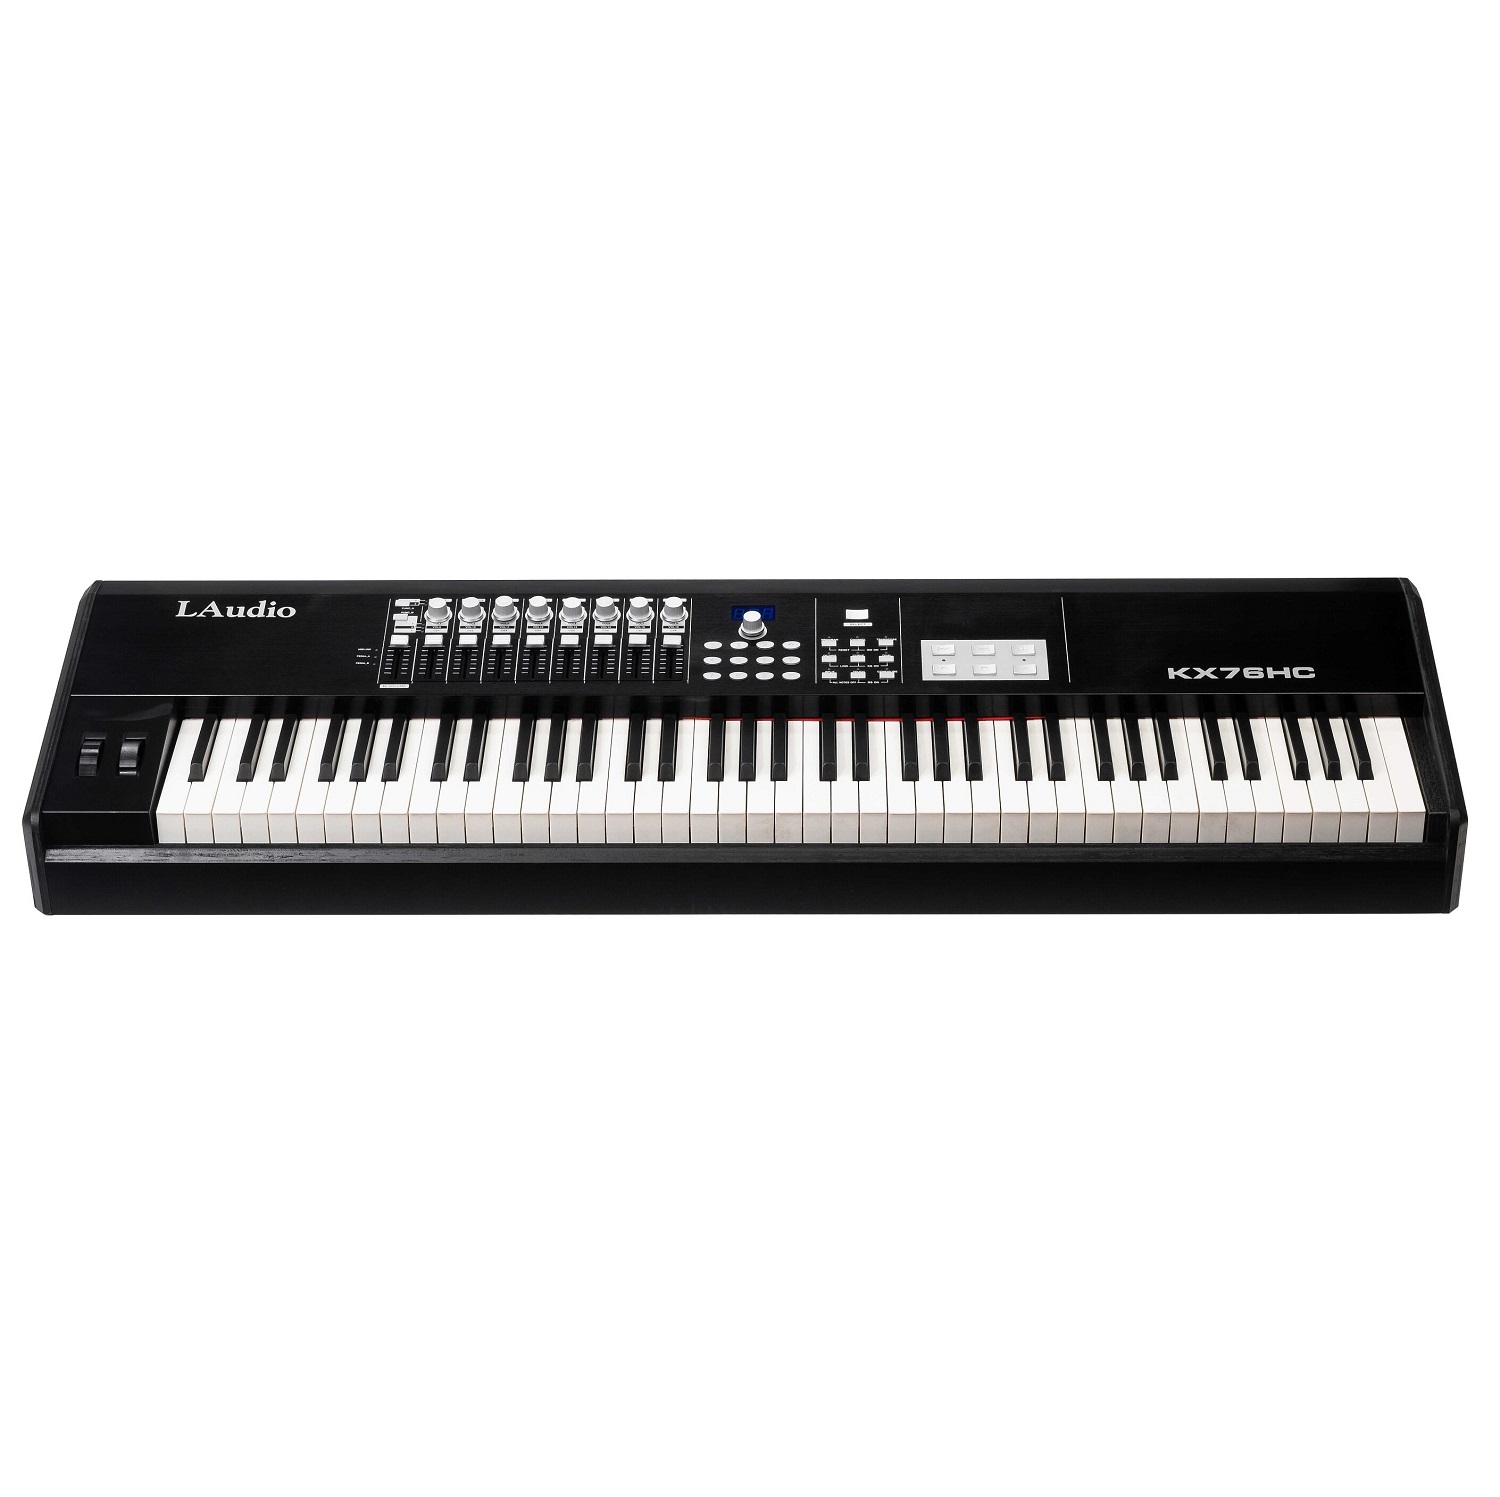 MIDI клавиатуры L Audio KX76HC